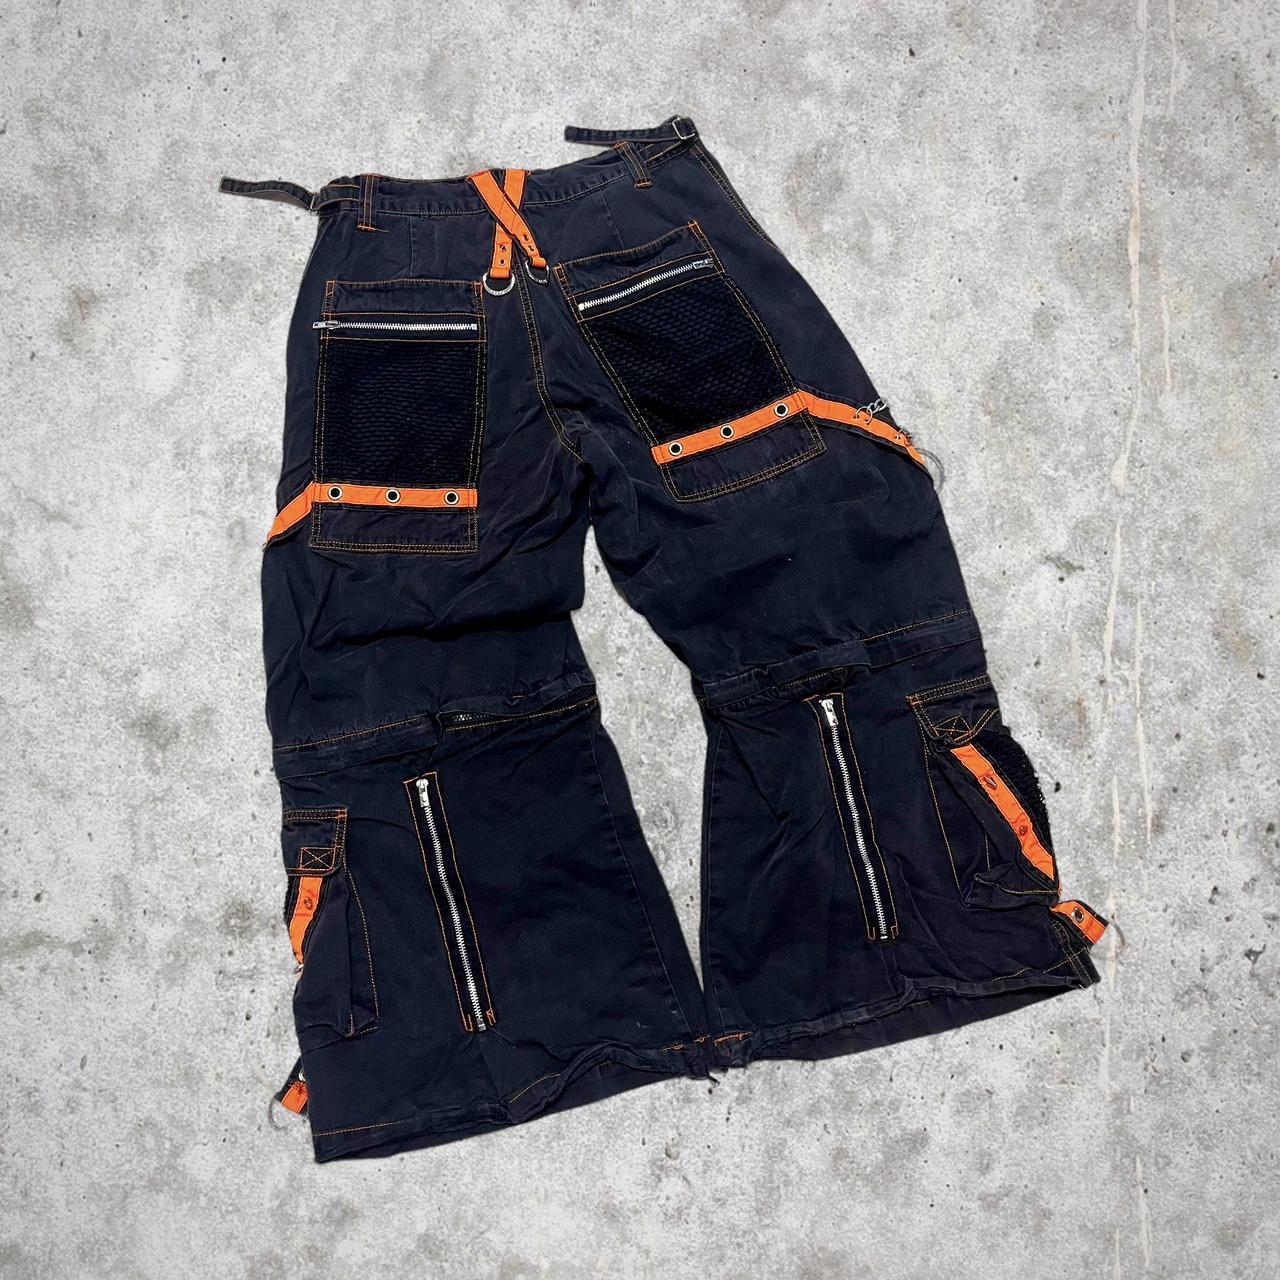 Tripp NYC rave pants Black and orange grommet 3D - Depop